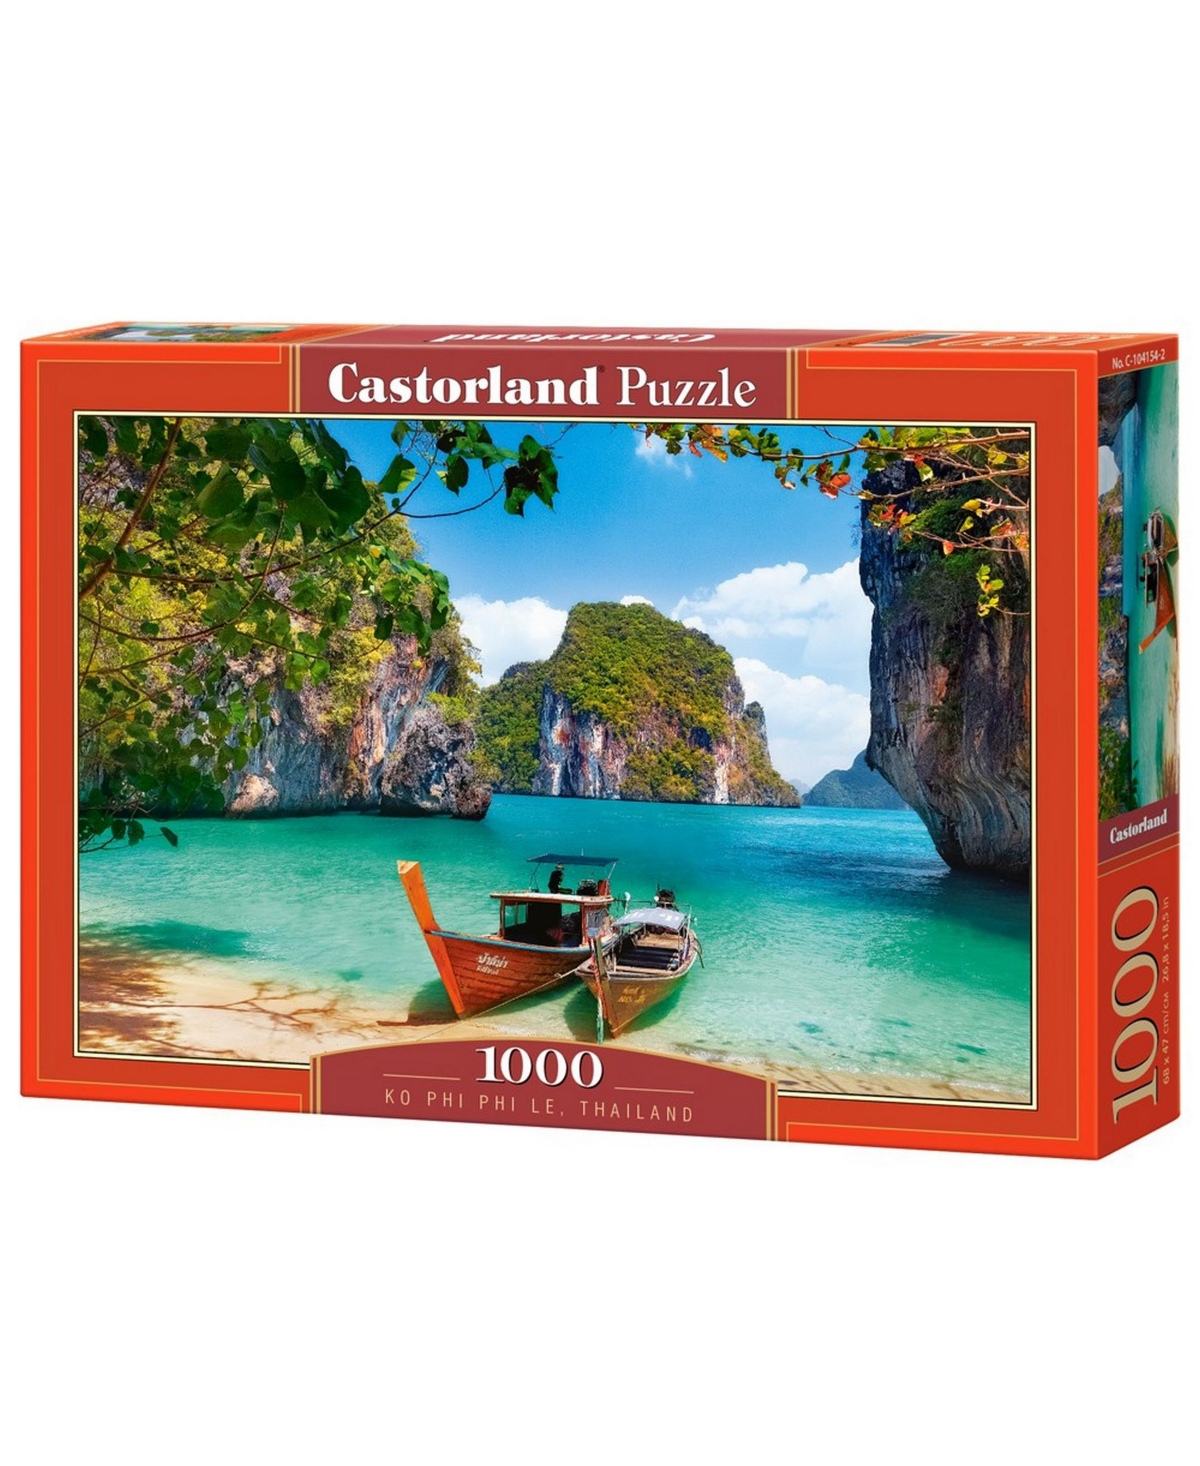 Castorland Kids' Ko Phi Phi Le, Thailand Jigsaw Puzzle Set, 1000 Piece In Multicolor